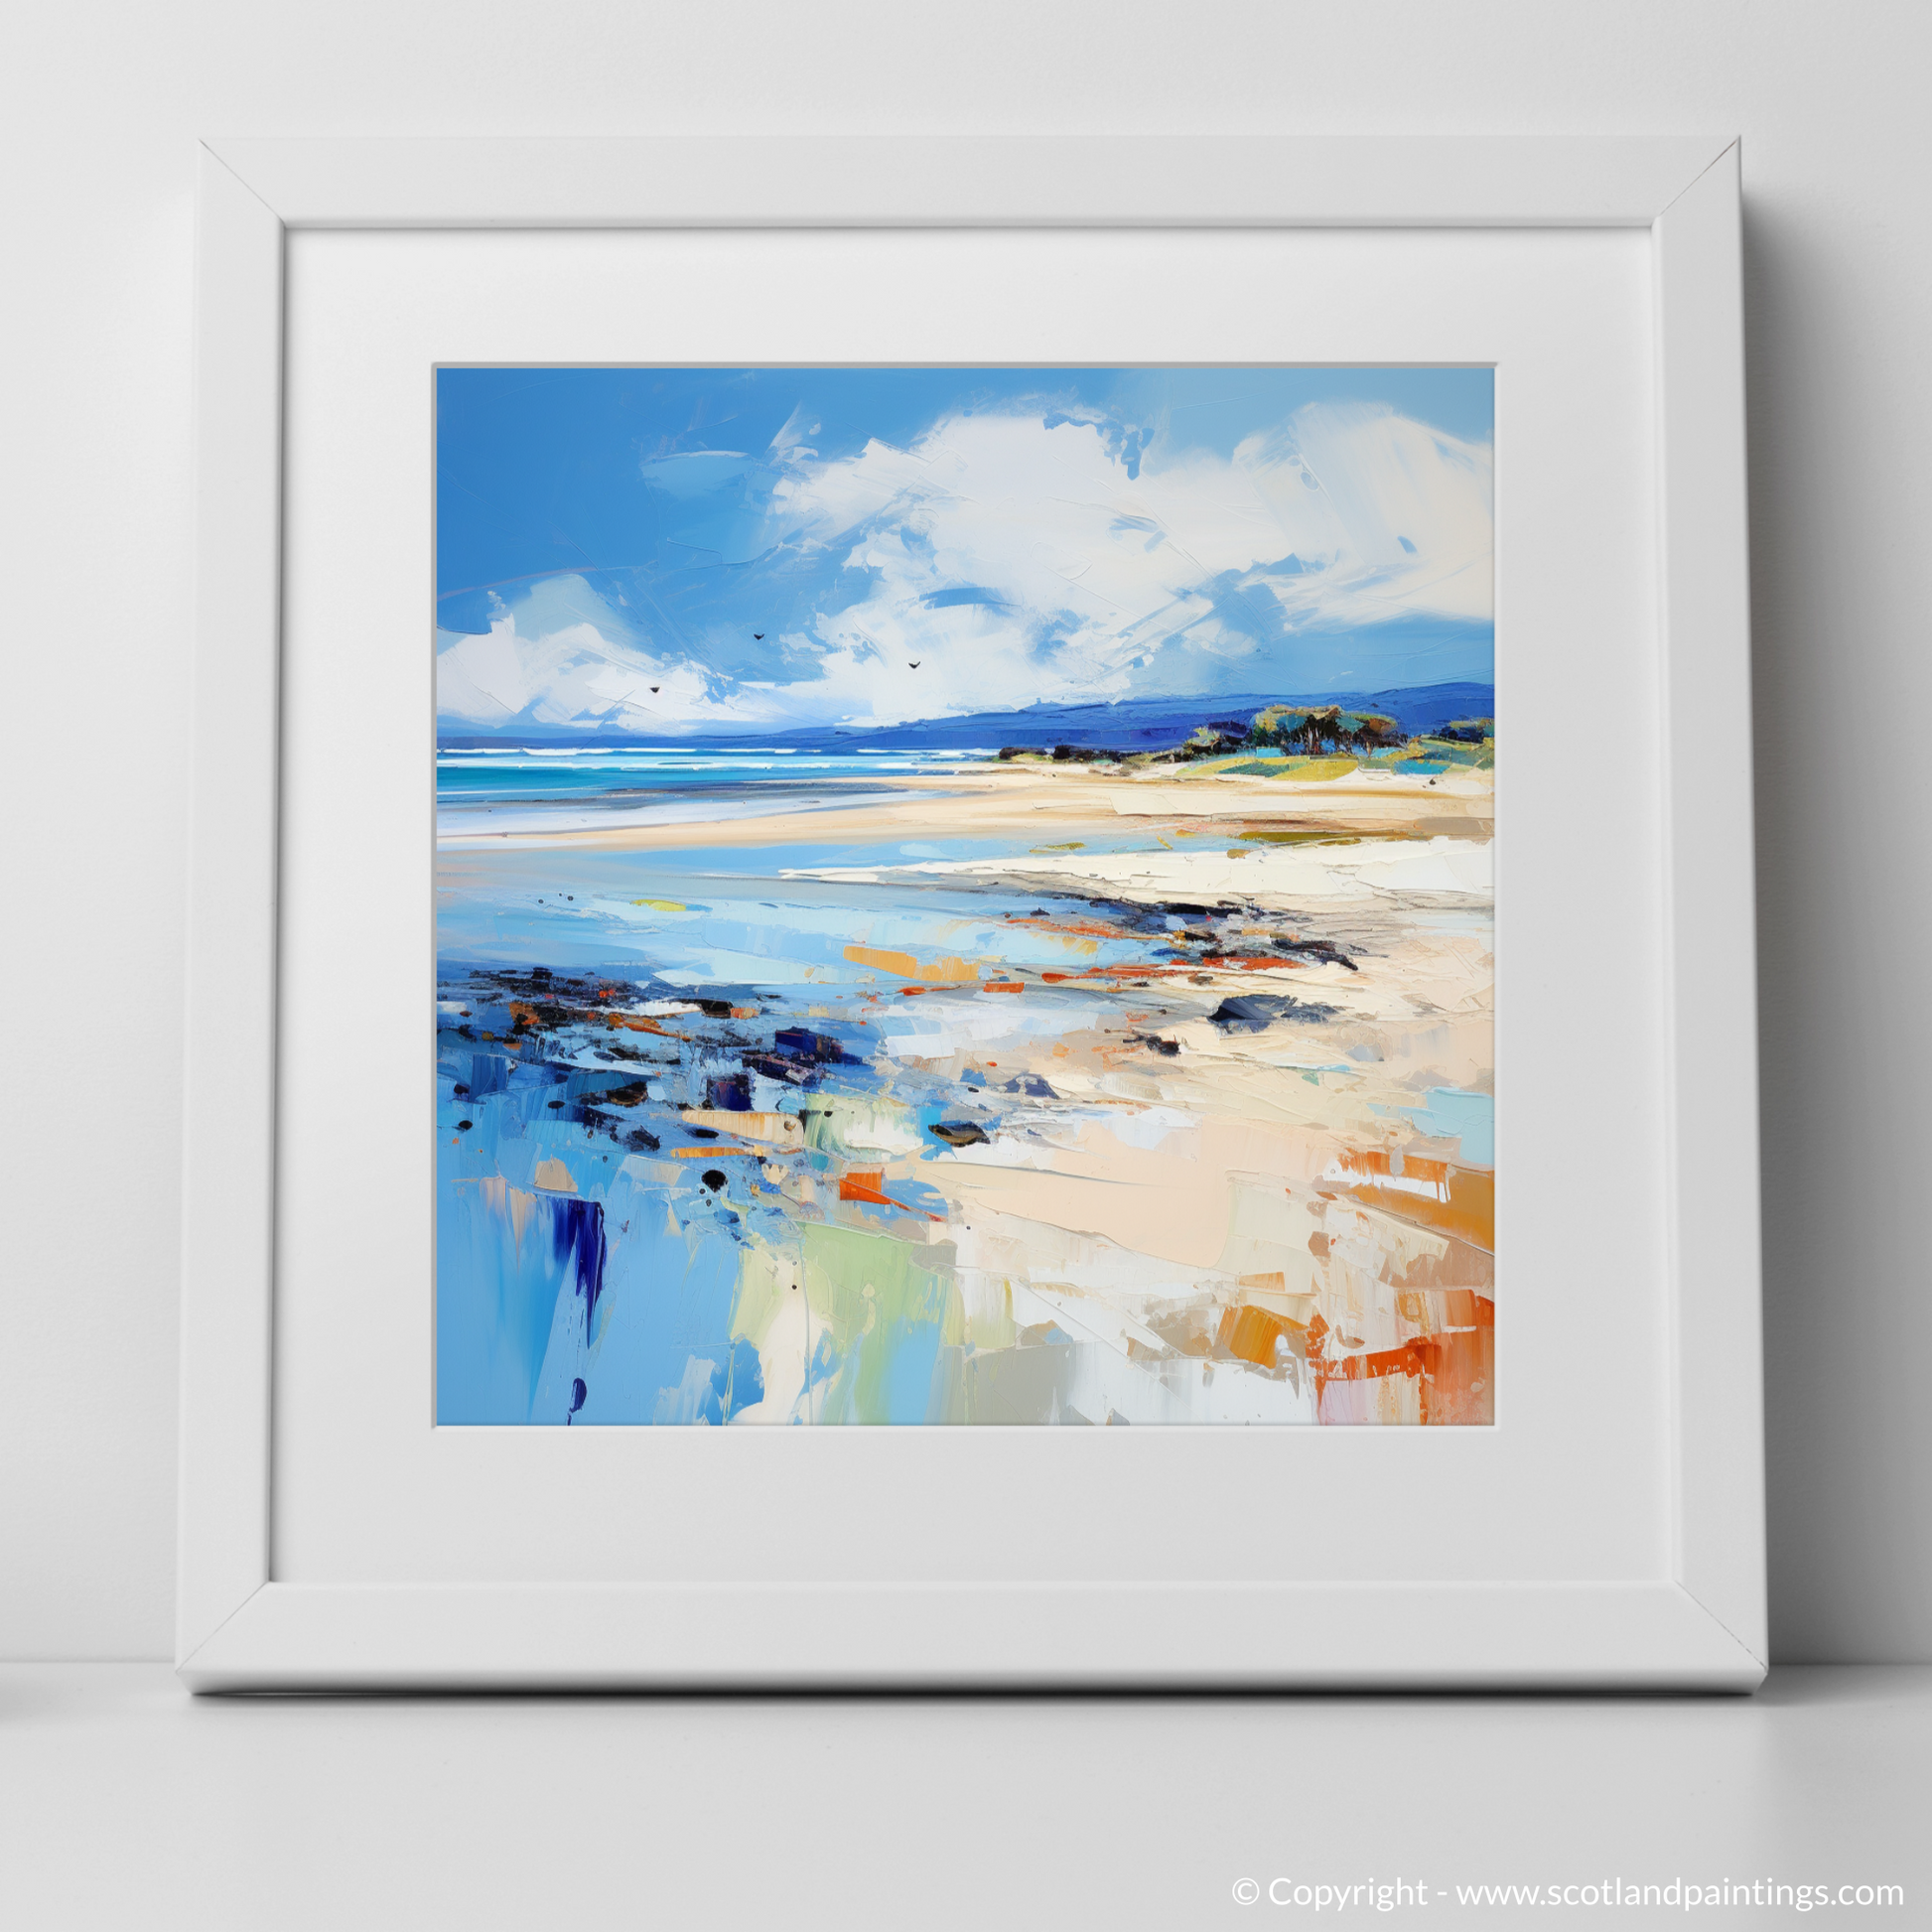 Art Print of Nairn Beach, Nairn with a white frame